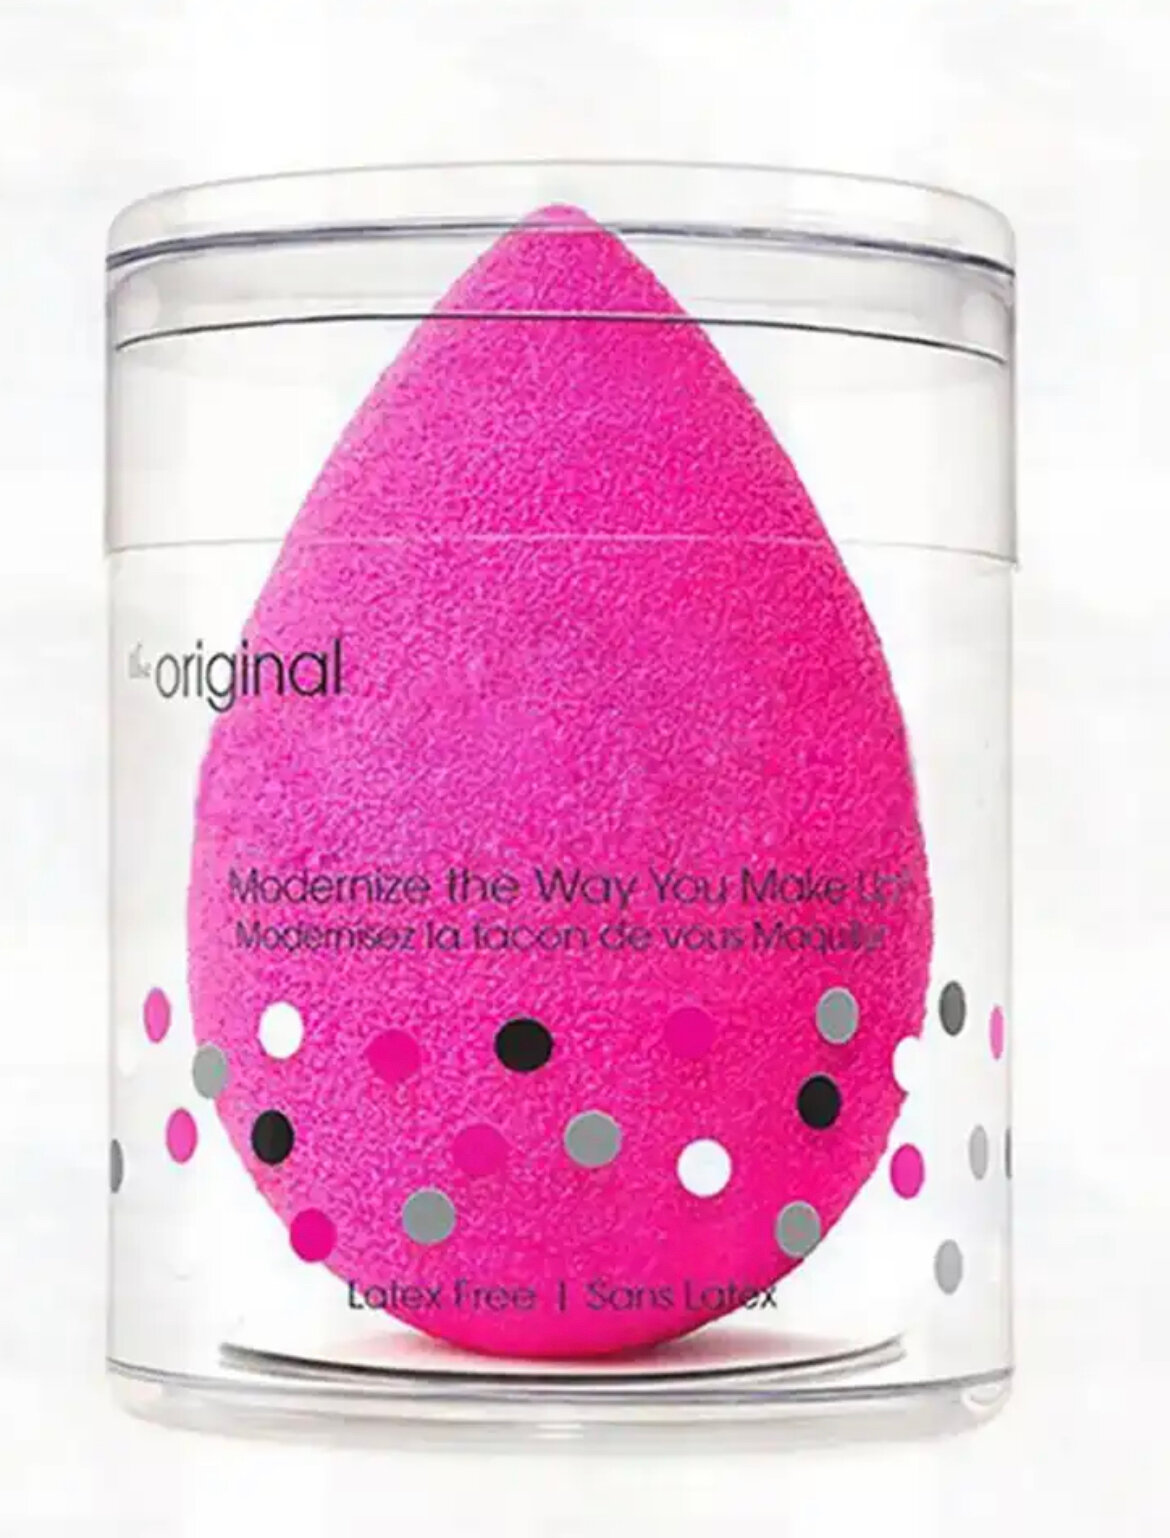 Beautyblender Original Pink Egg Sponge - безлатексный спонж для лица в форме яйца